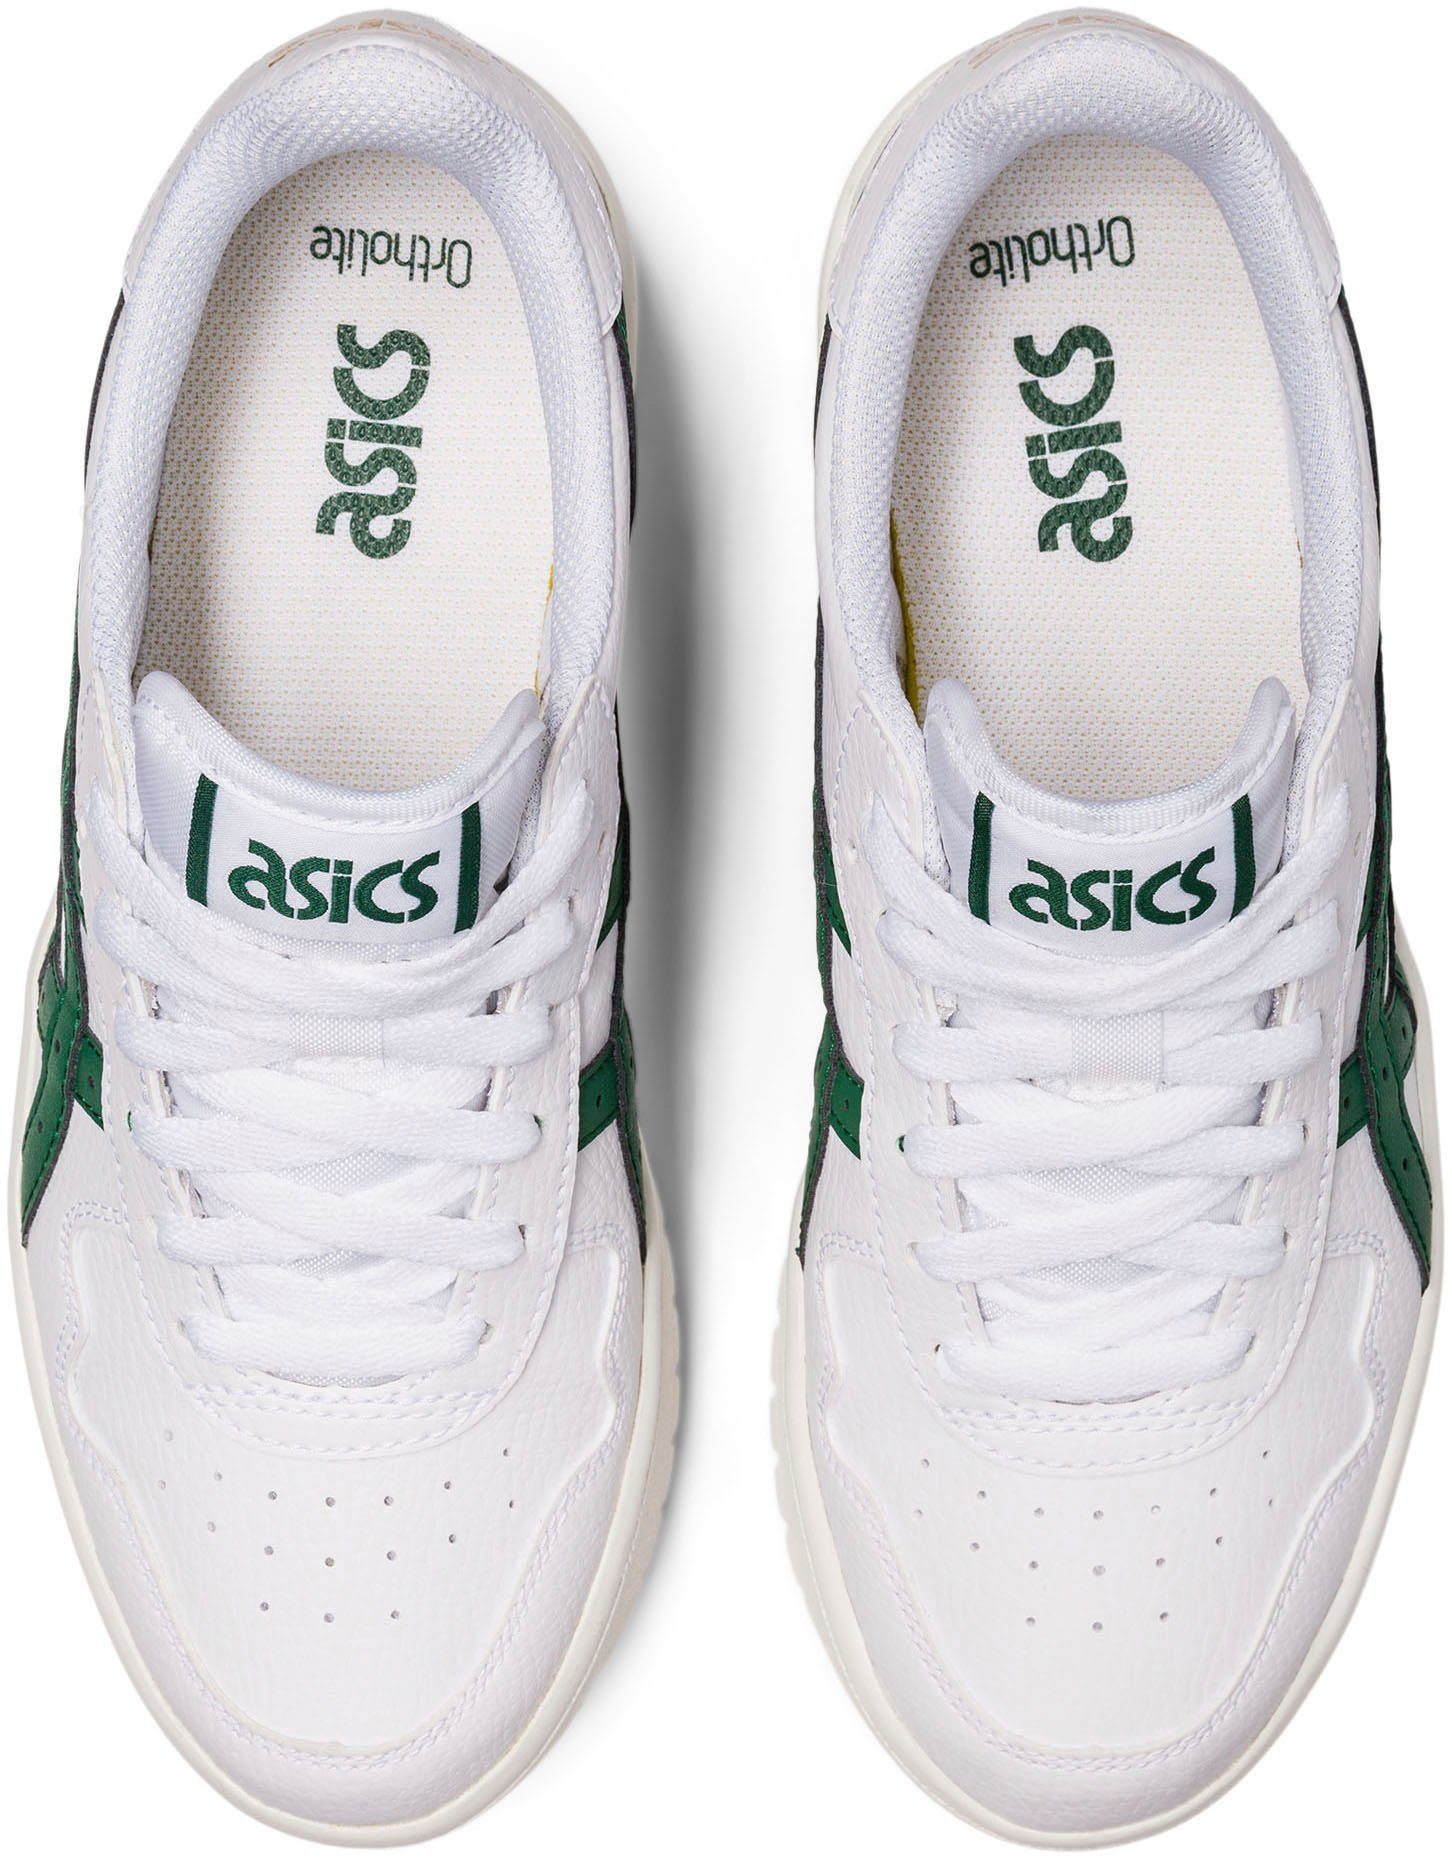 S ASICS weiß-grün SportStyle PF JAPAN Sneaker